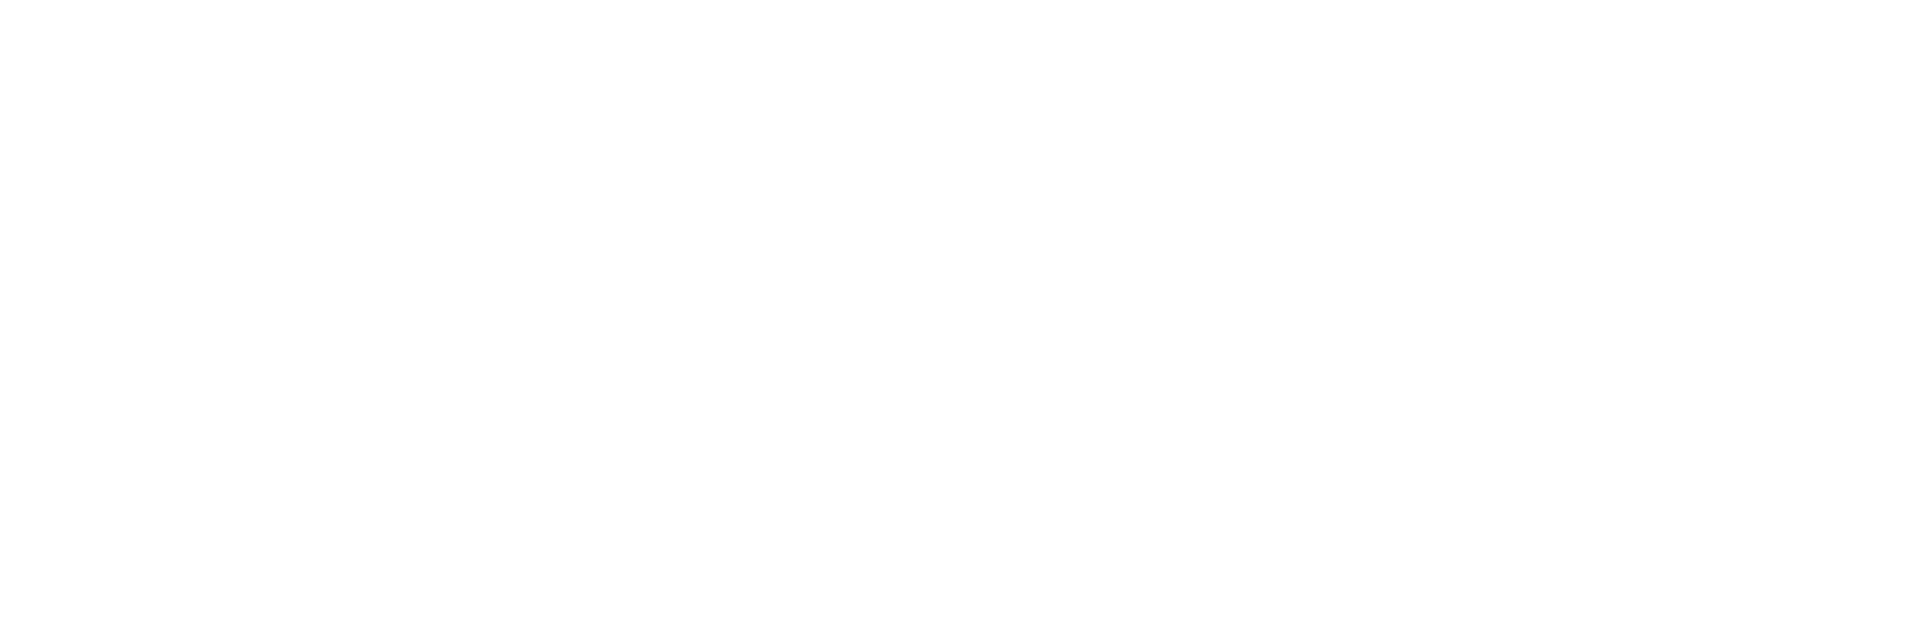 Tribal Health